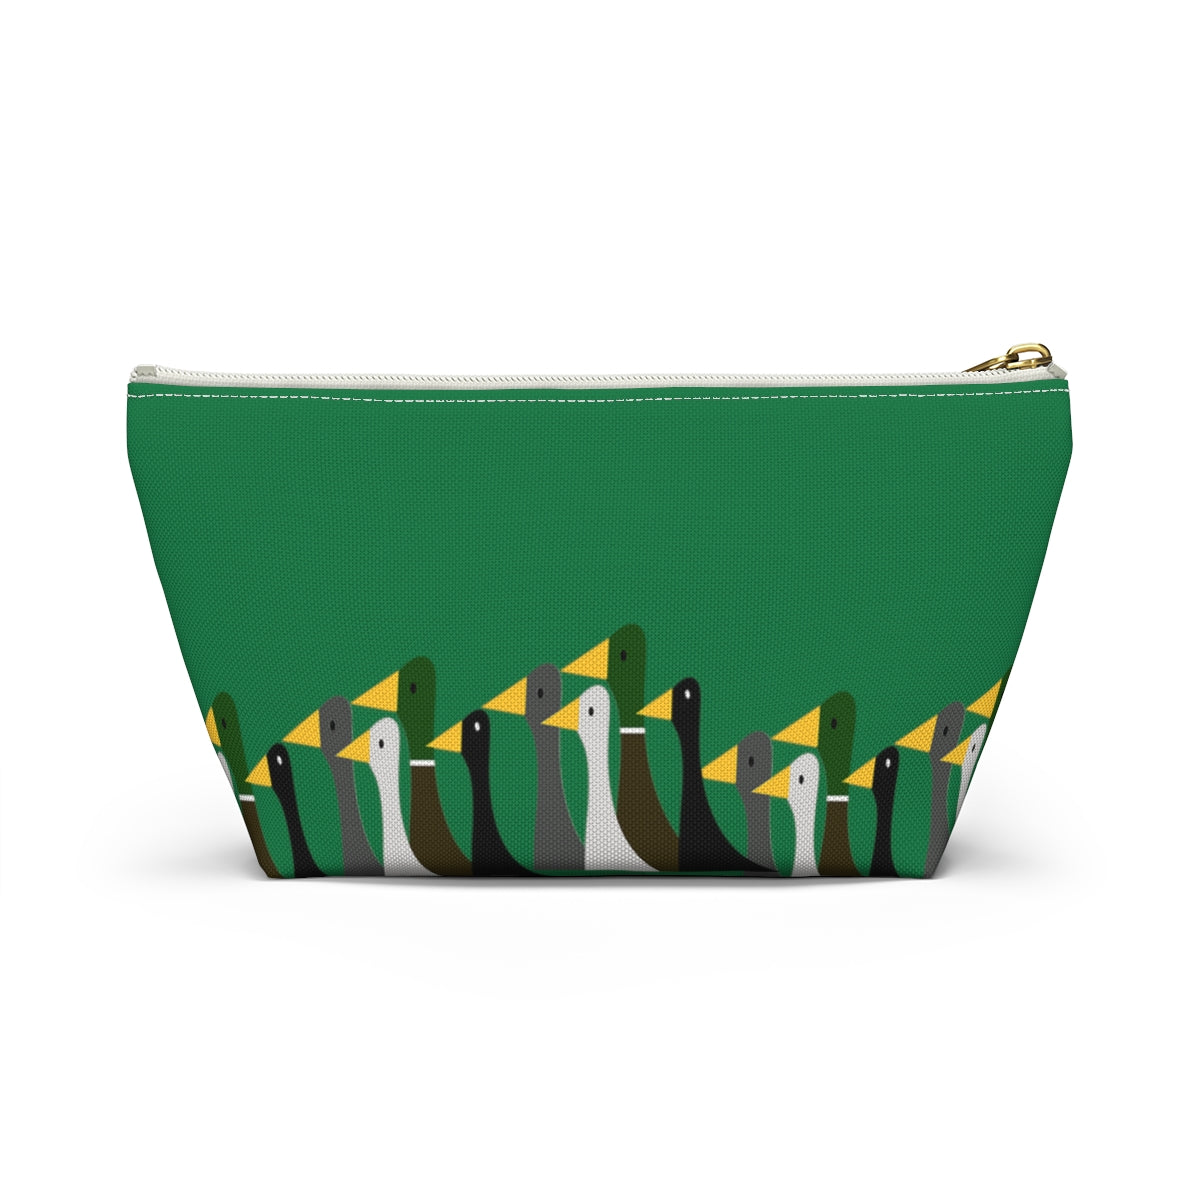 Marching ducks - green - Accessory Pouch w T-bottom